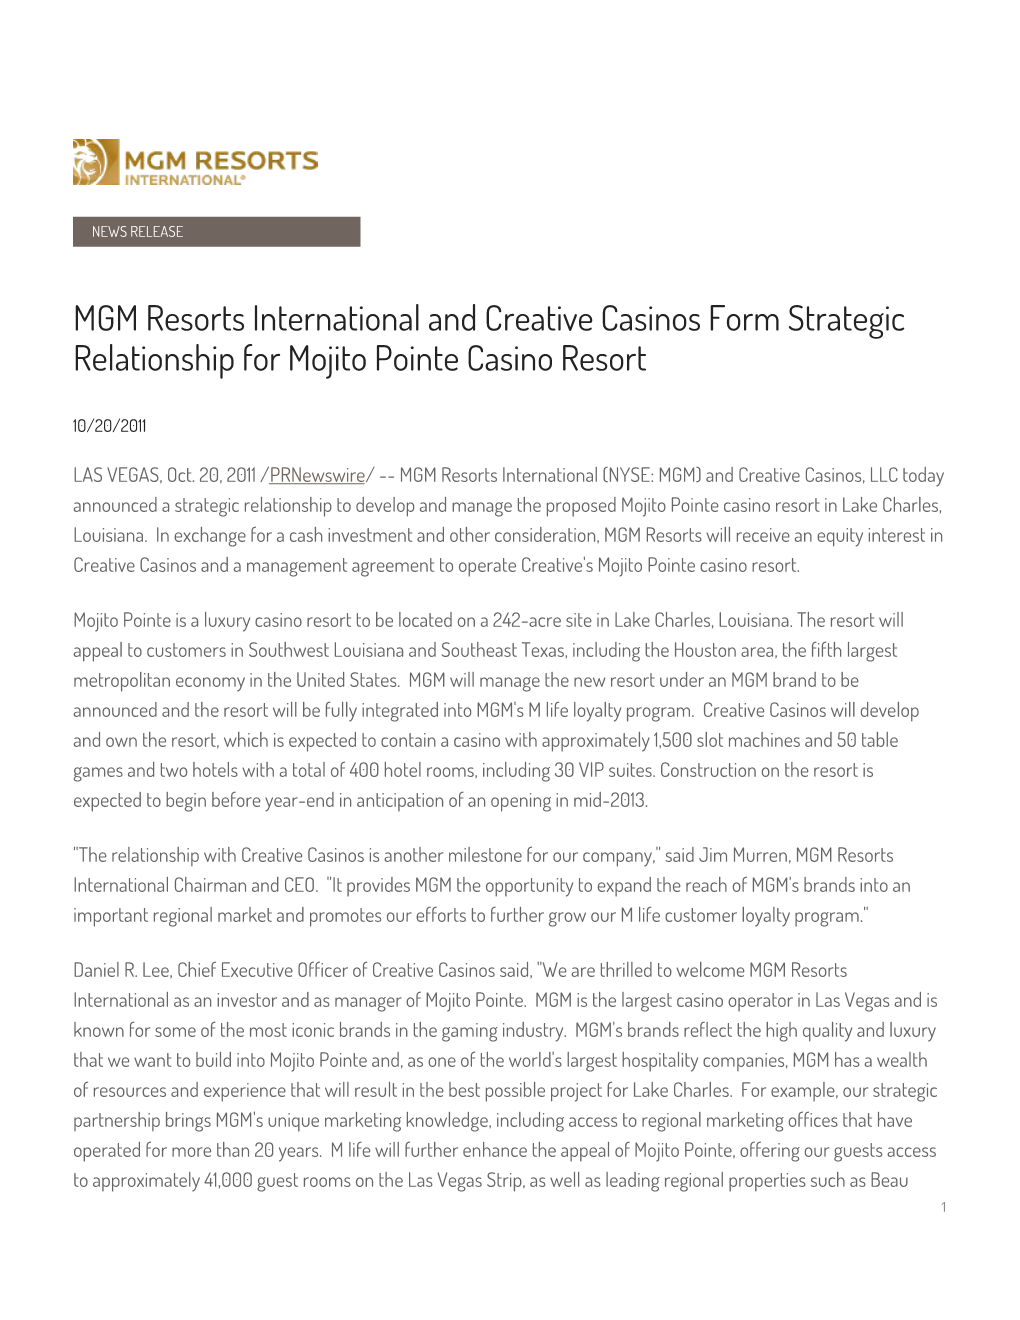 MGM Resorts International and Creative Casinos Form Strategic Relationship for Mojito Pointe Casino Resort